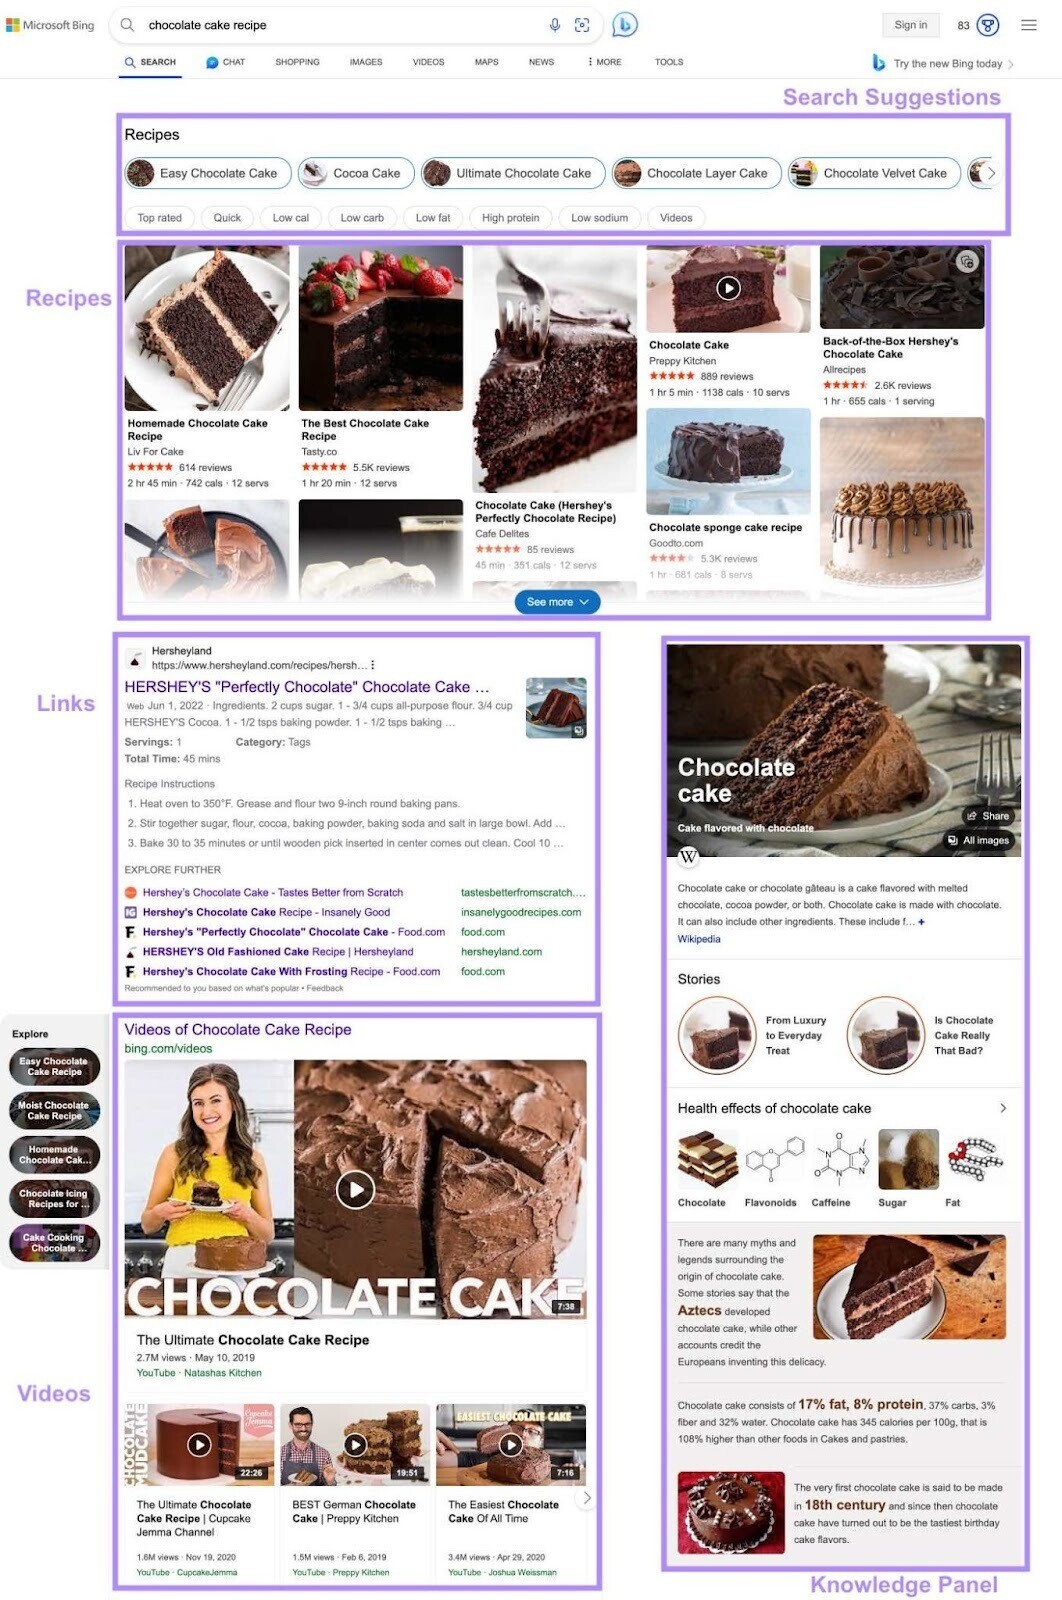 Bing SERP for “chocolate cake recipe”